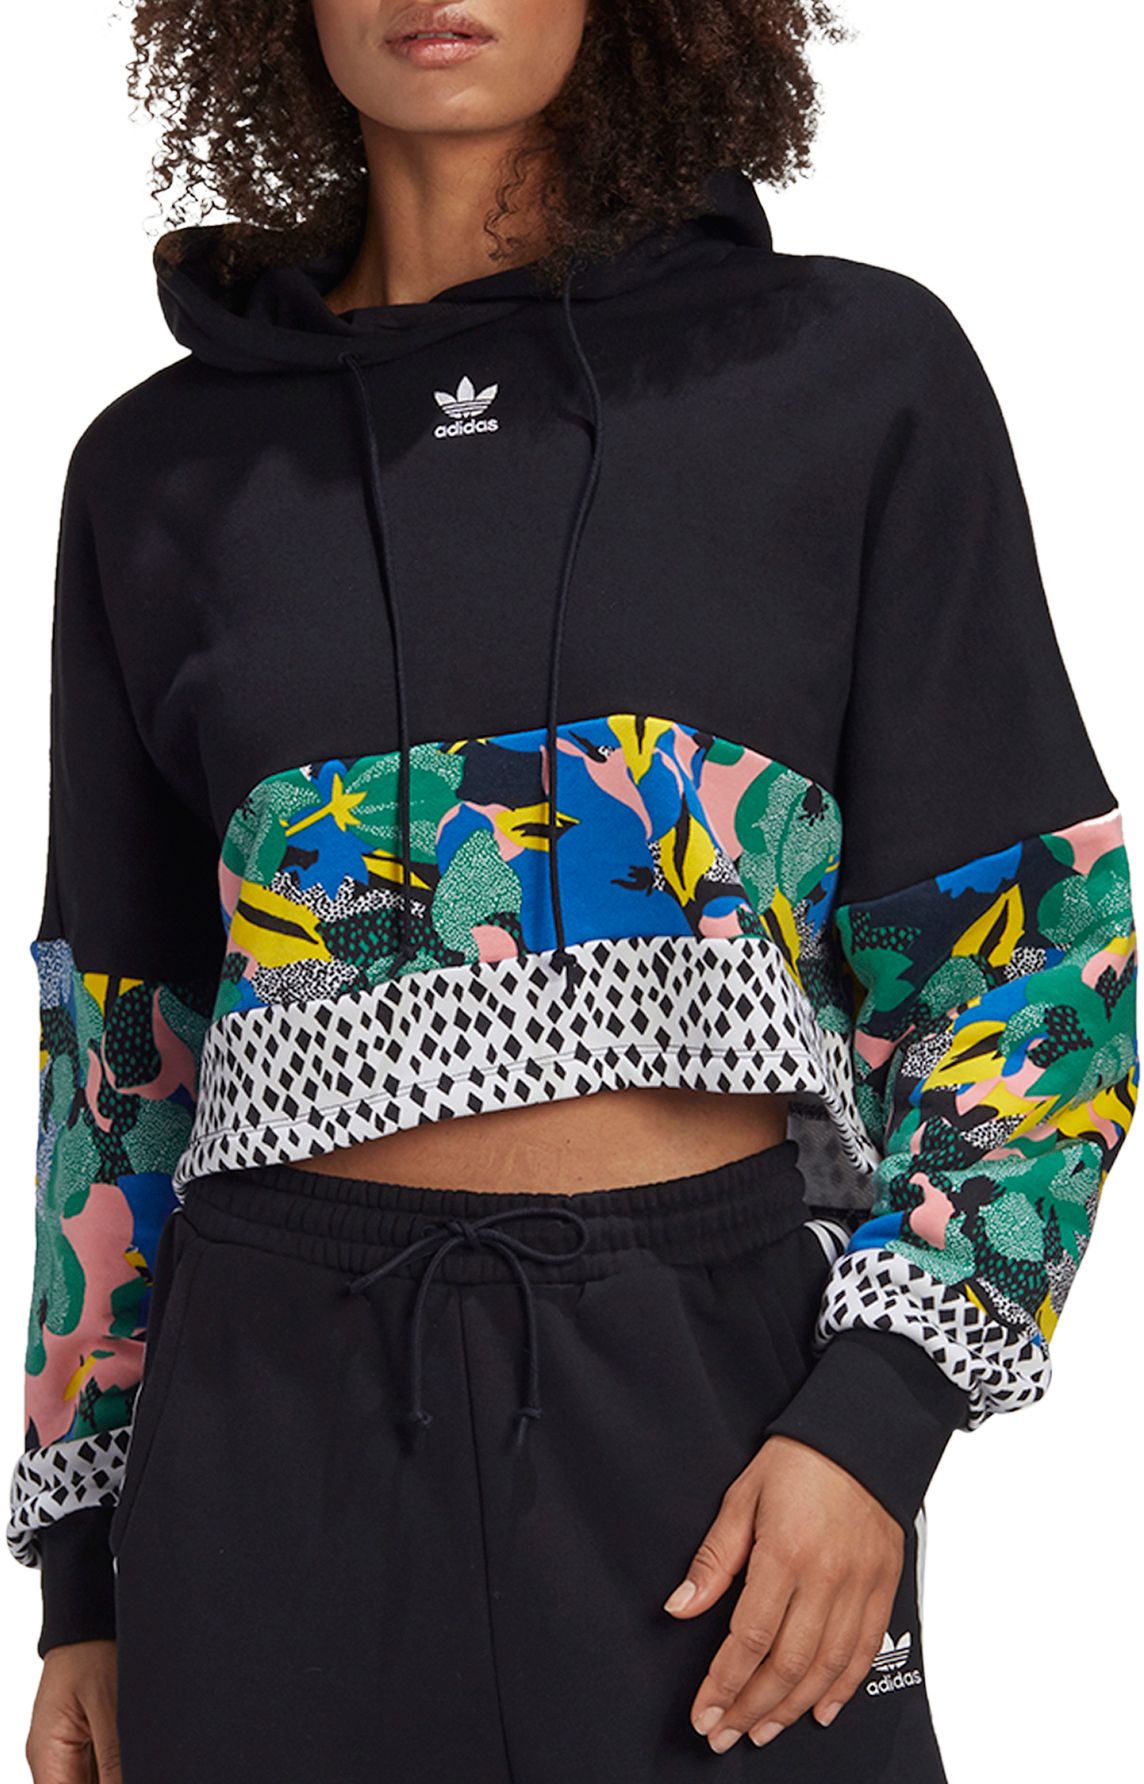 girls adidas cropped hoodie